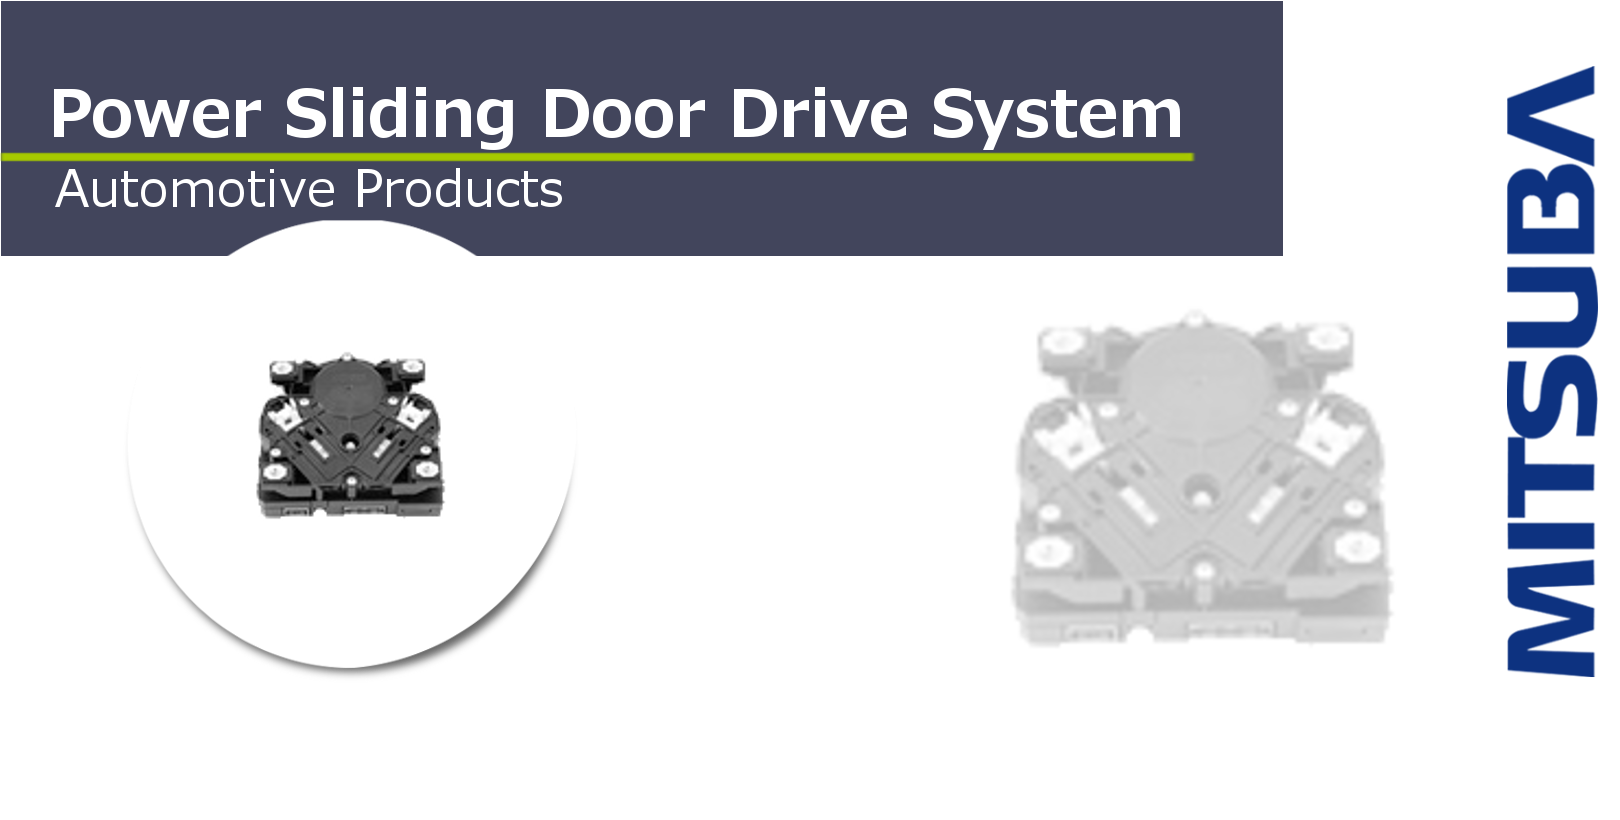 Power Sliding Door Drive System